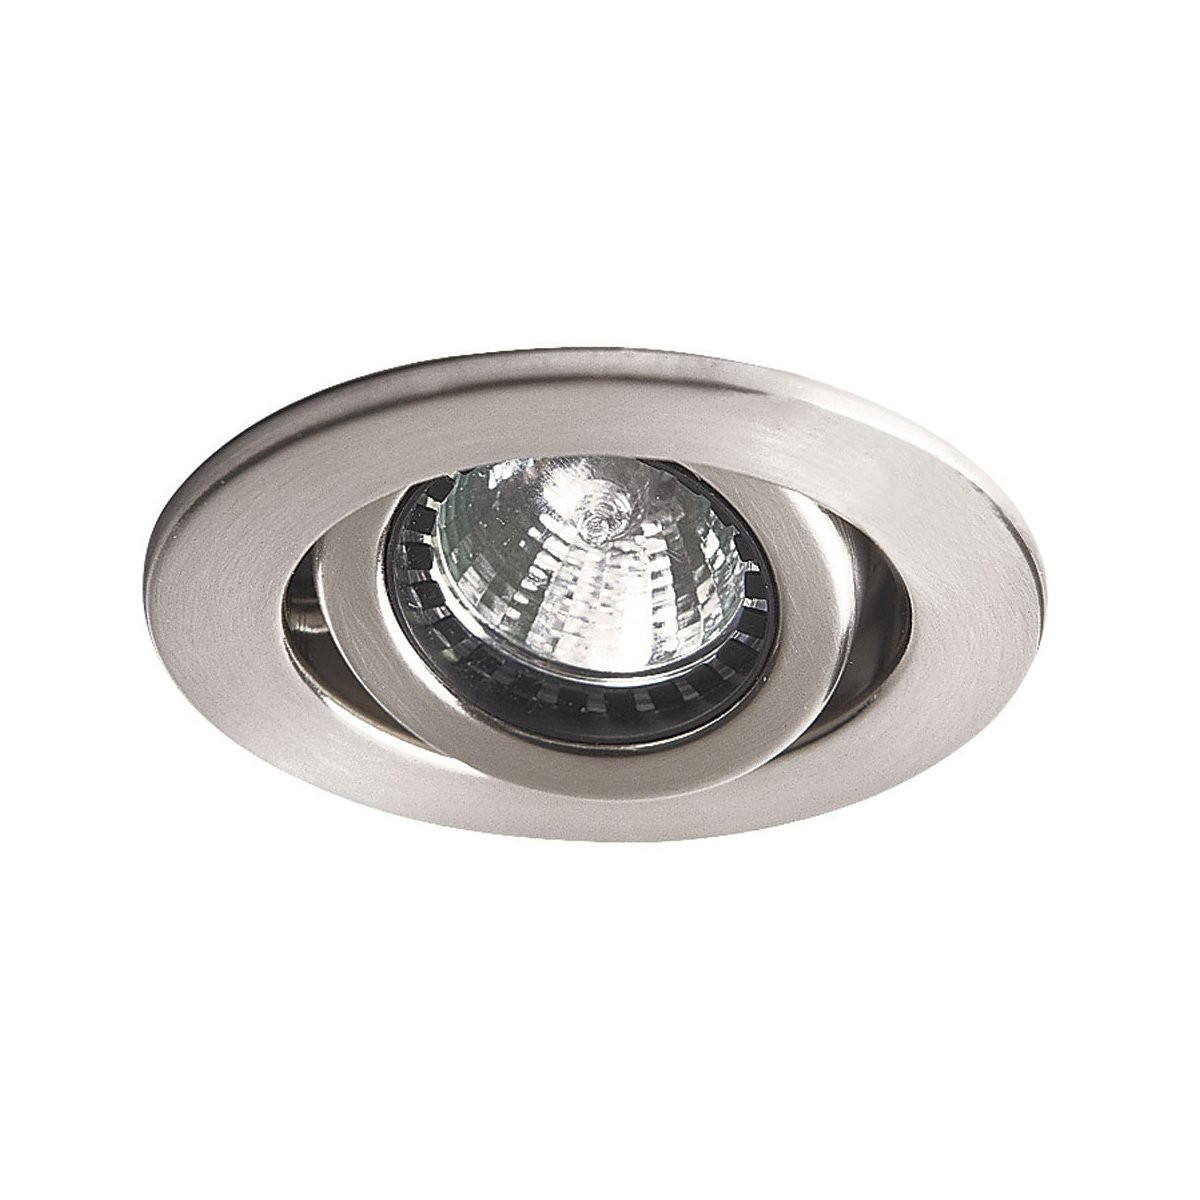 Best ideas about Recessed Lighting Lowes
. Save or Pin Dainolite Lighting DL305 Eyeball Recessed Lighting Trim Now.